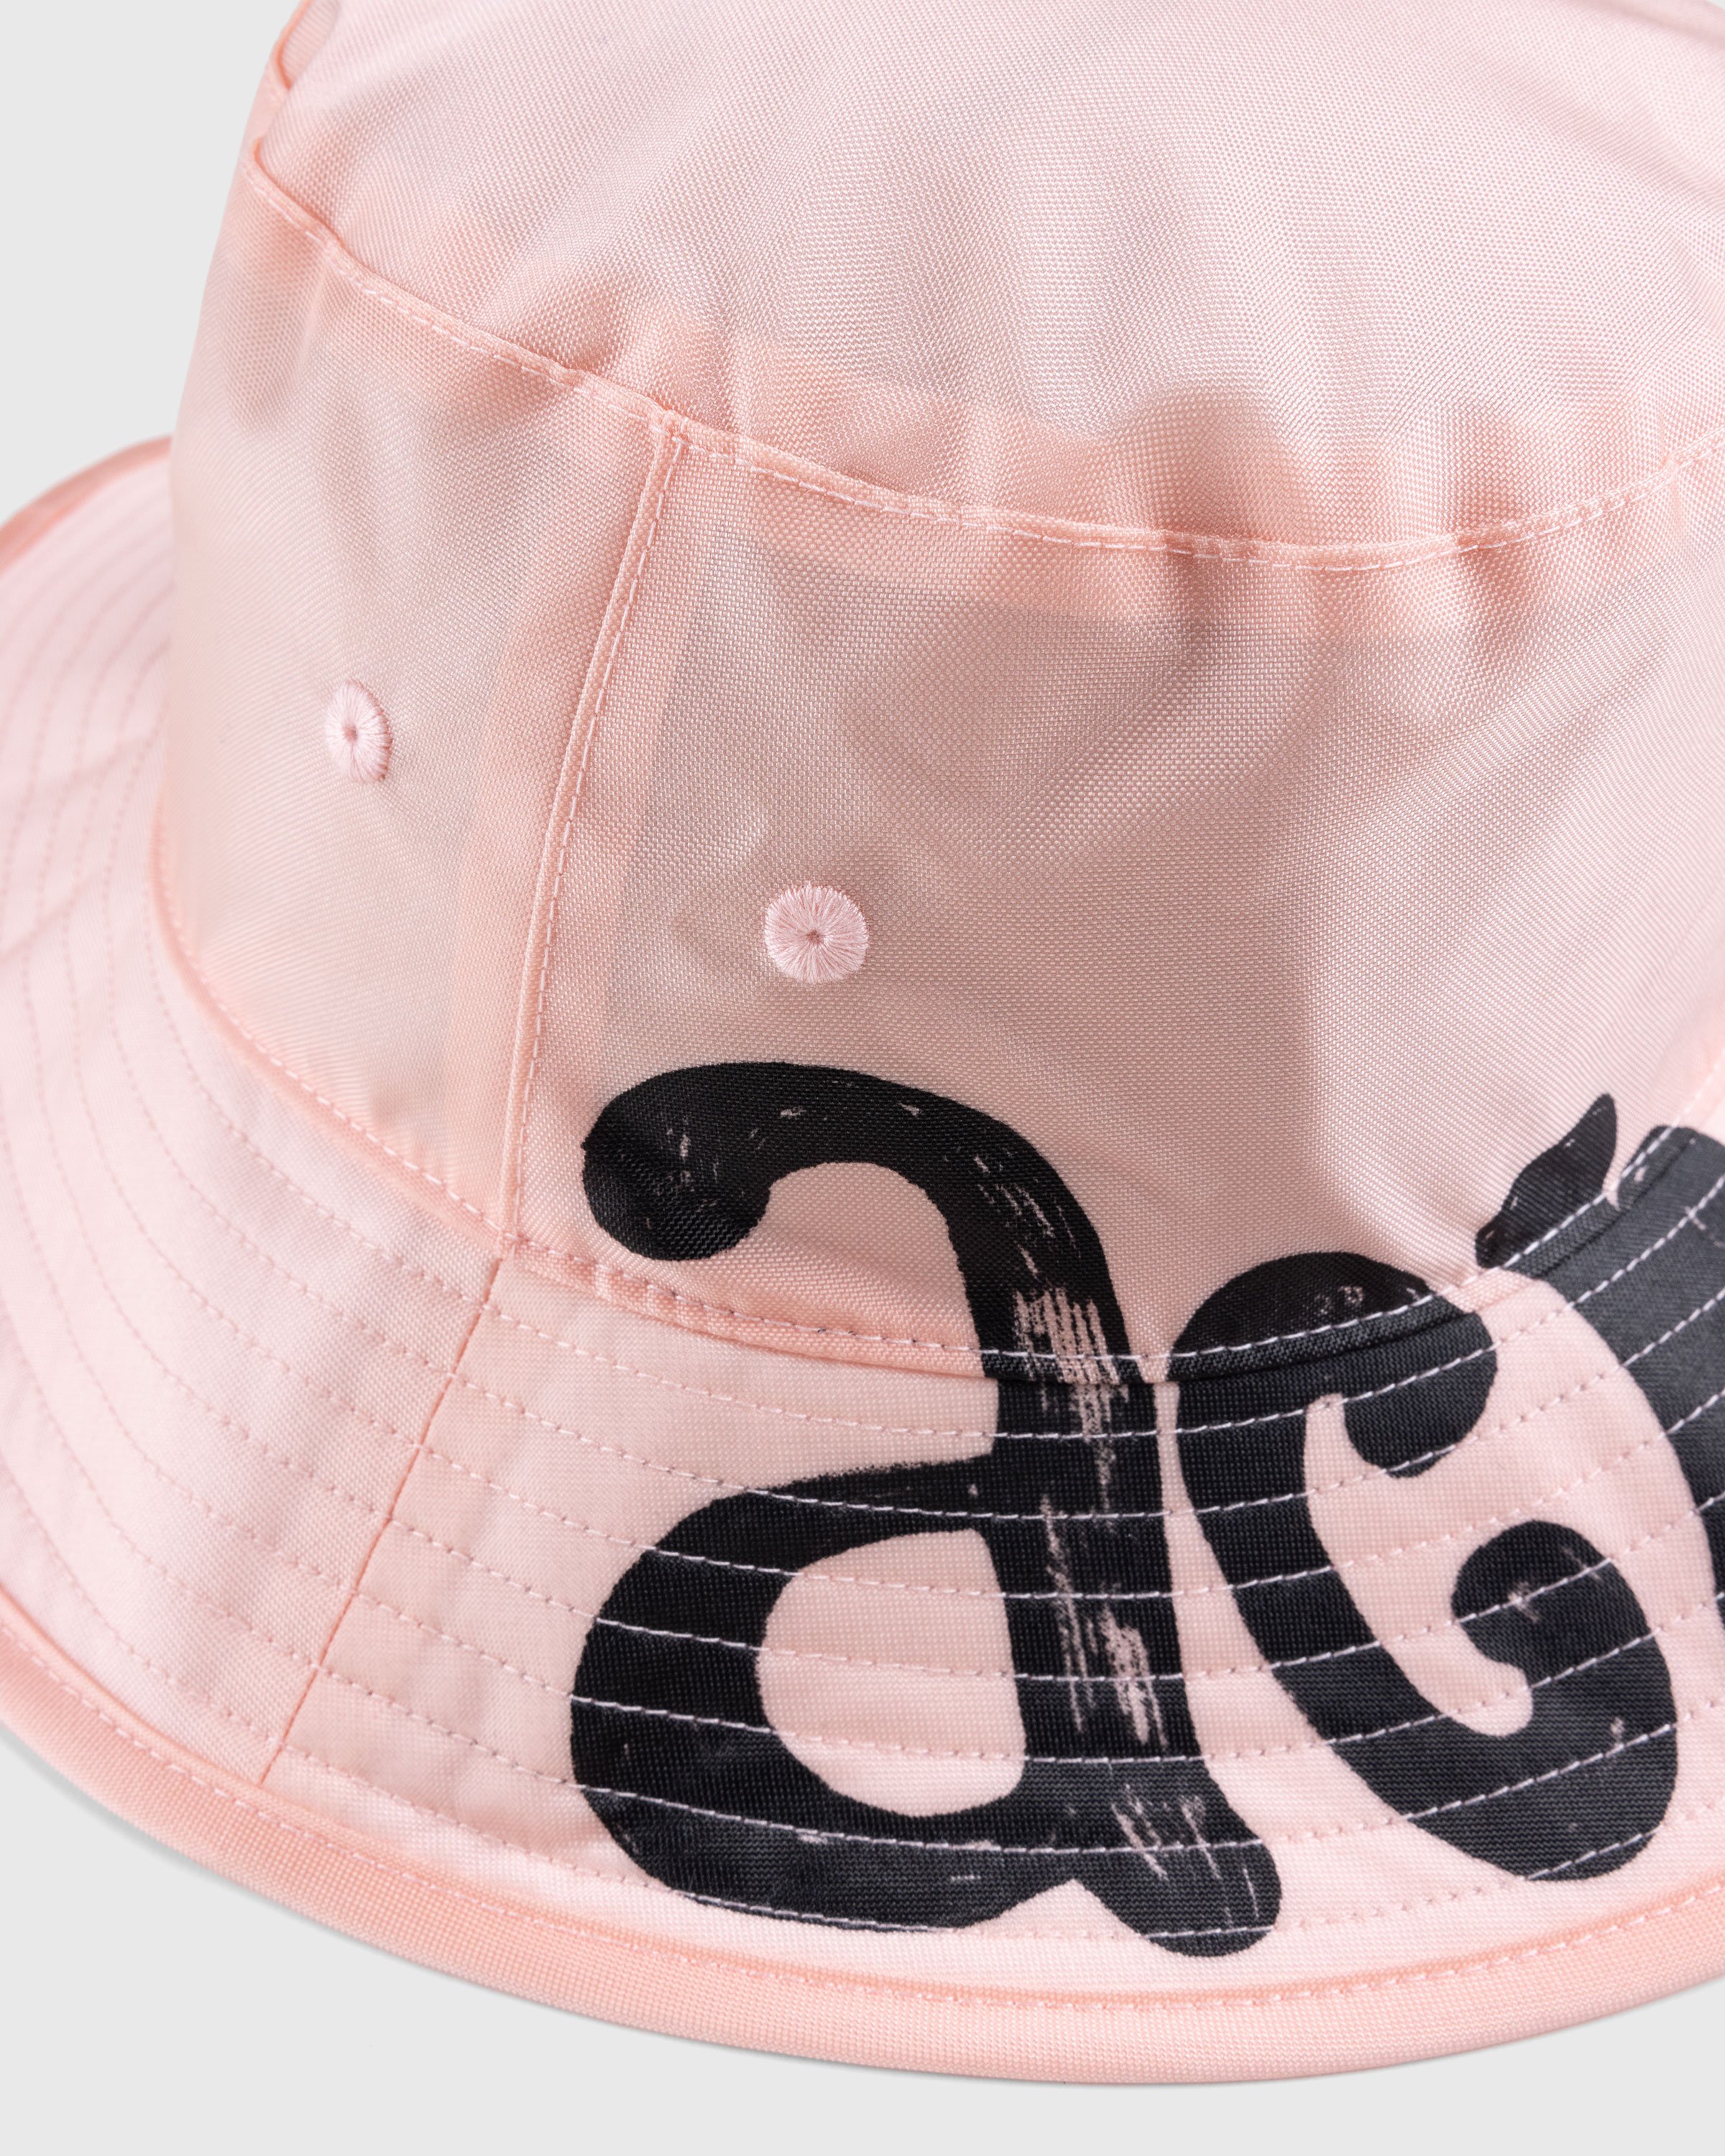 Acne Studios - Logo Bucket Hat Peach Pink - Accessories - Pink - Image 3